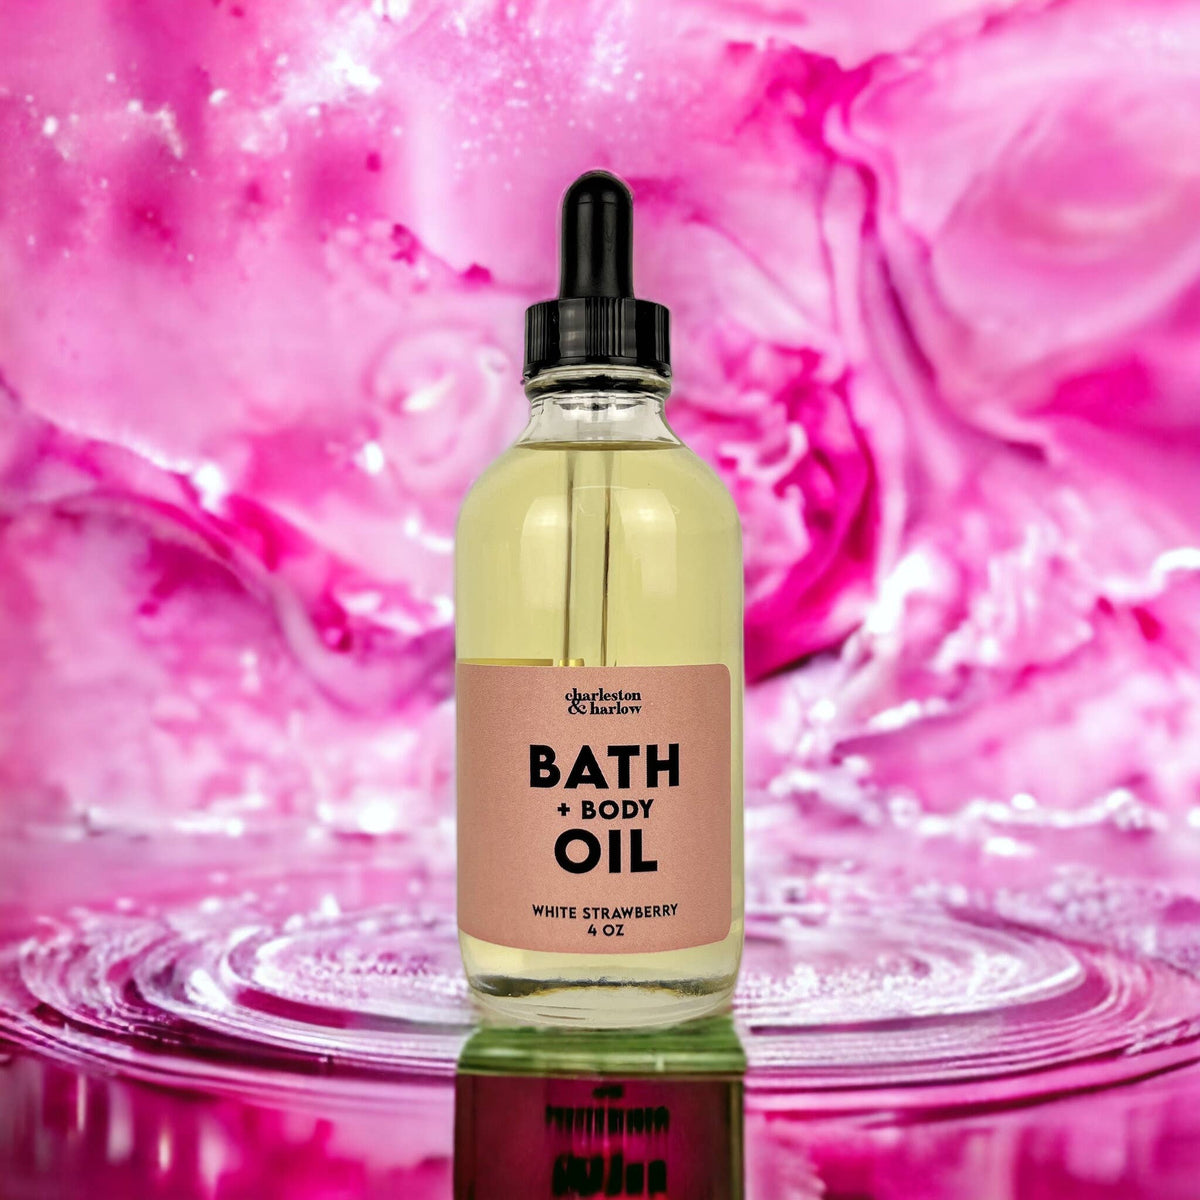 Bath + Body Oil - White Strawberry